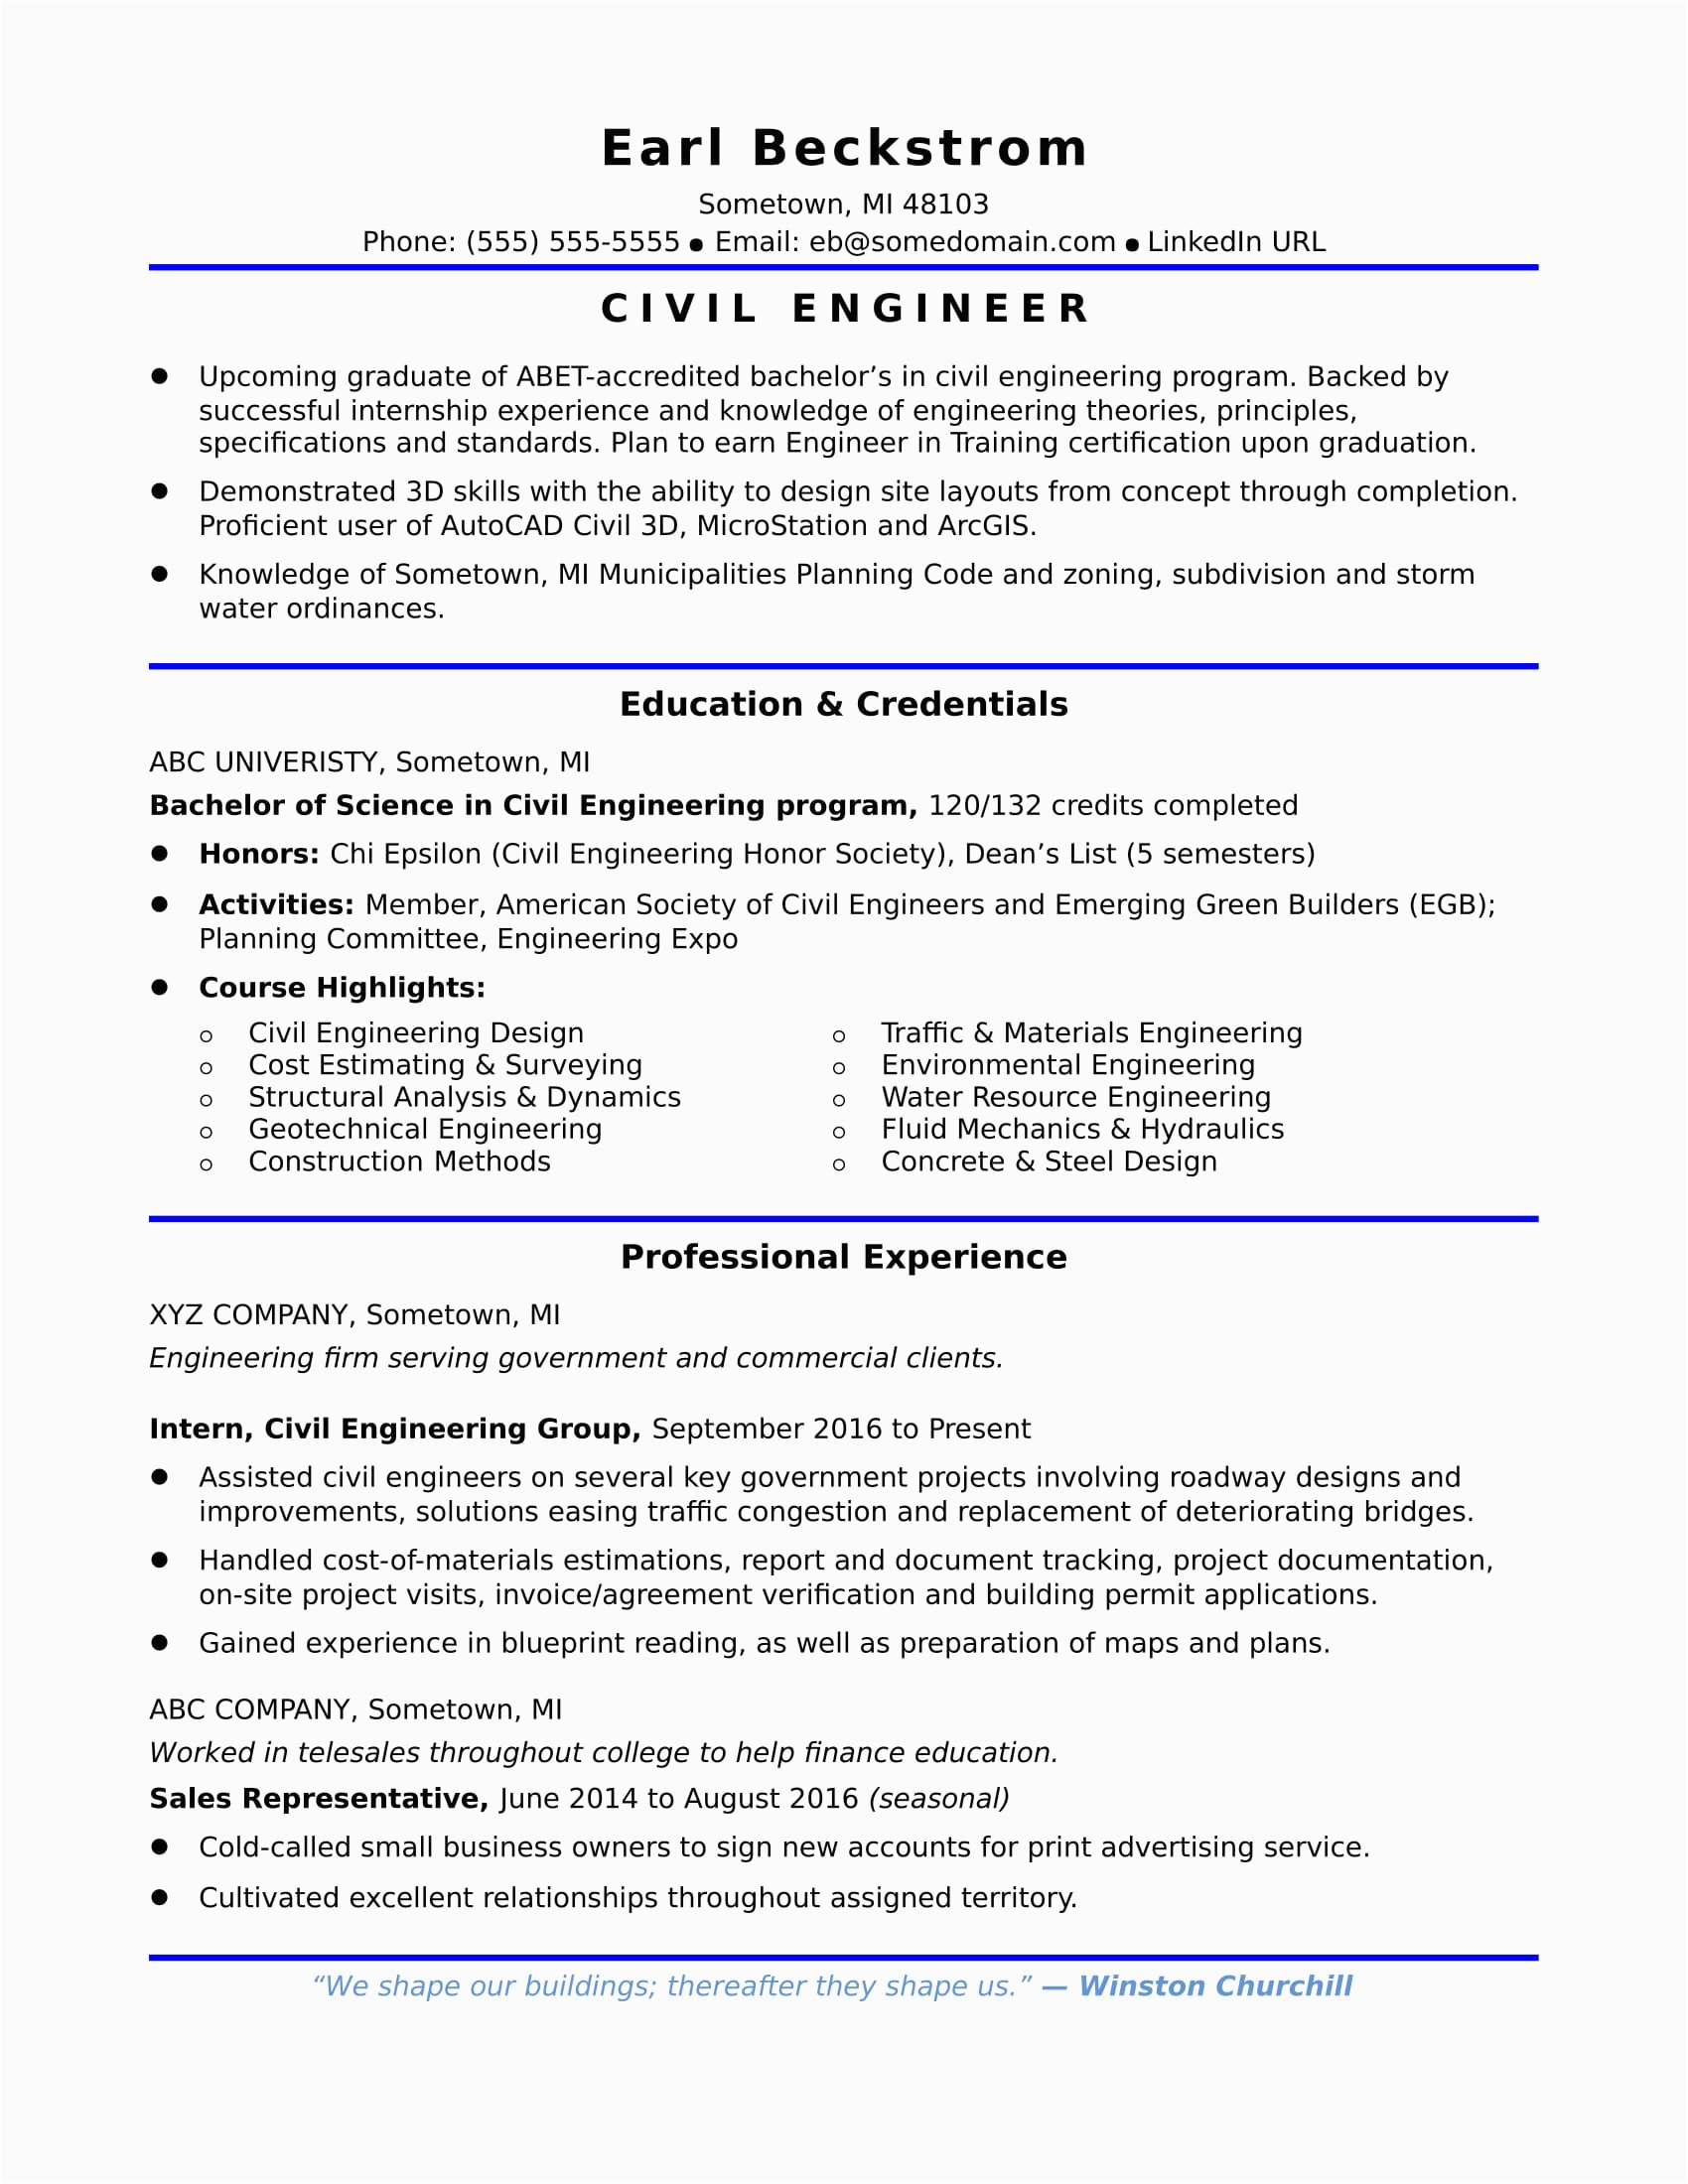 Entry Level Job Functional Resume Samples Sample Resume for An Entry Level Civil Engineer